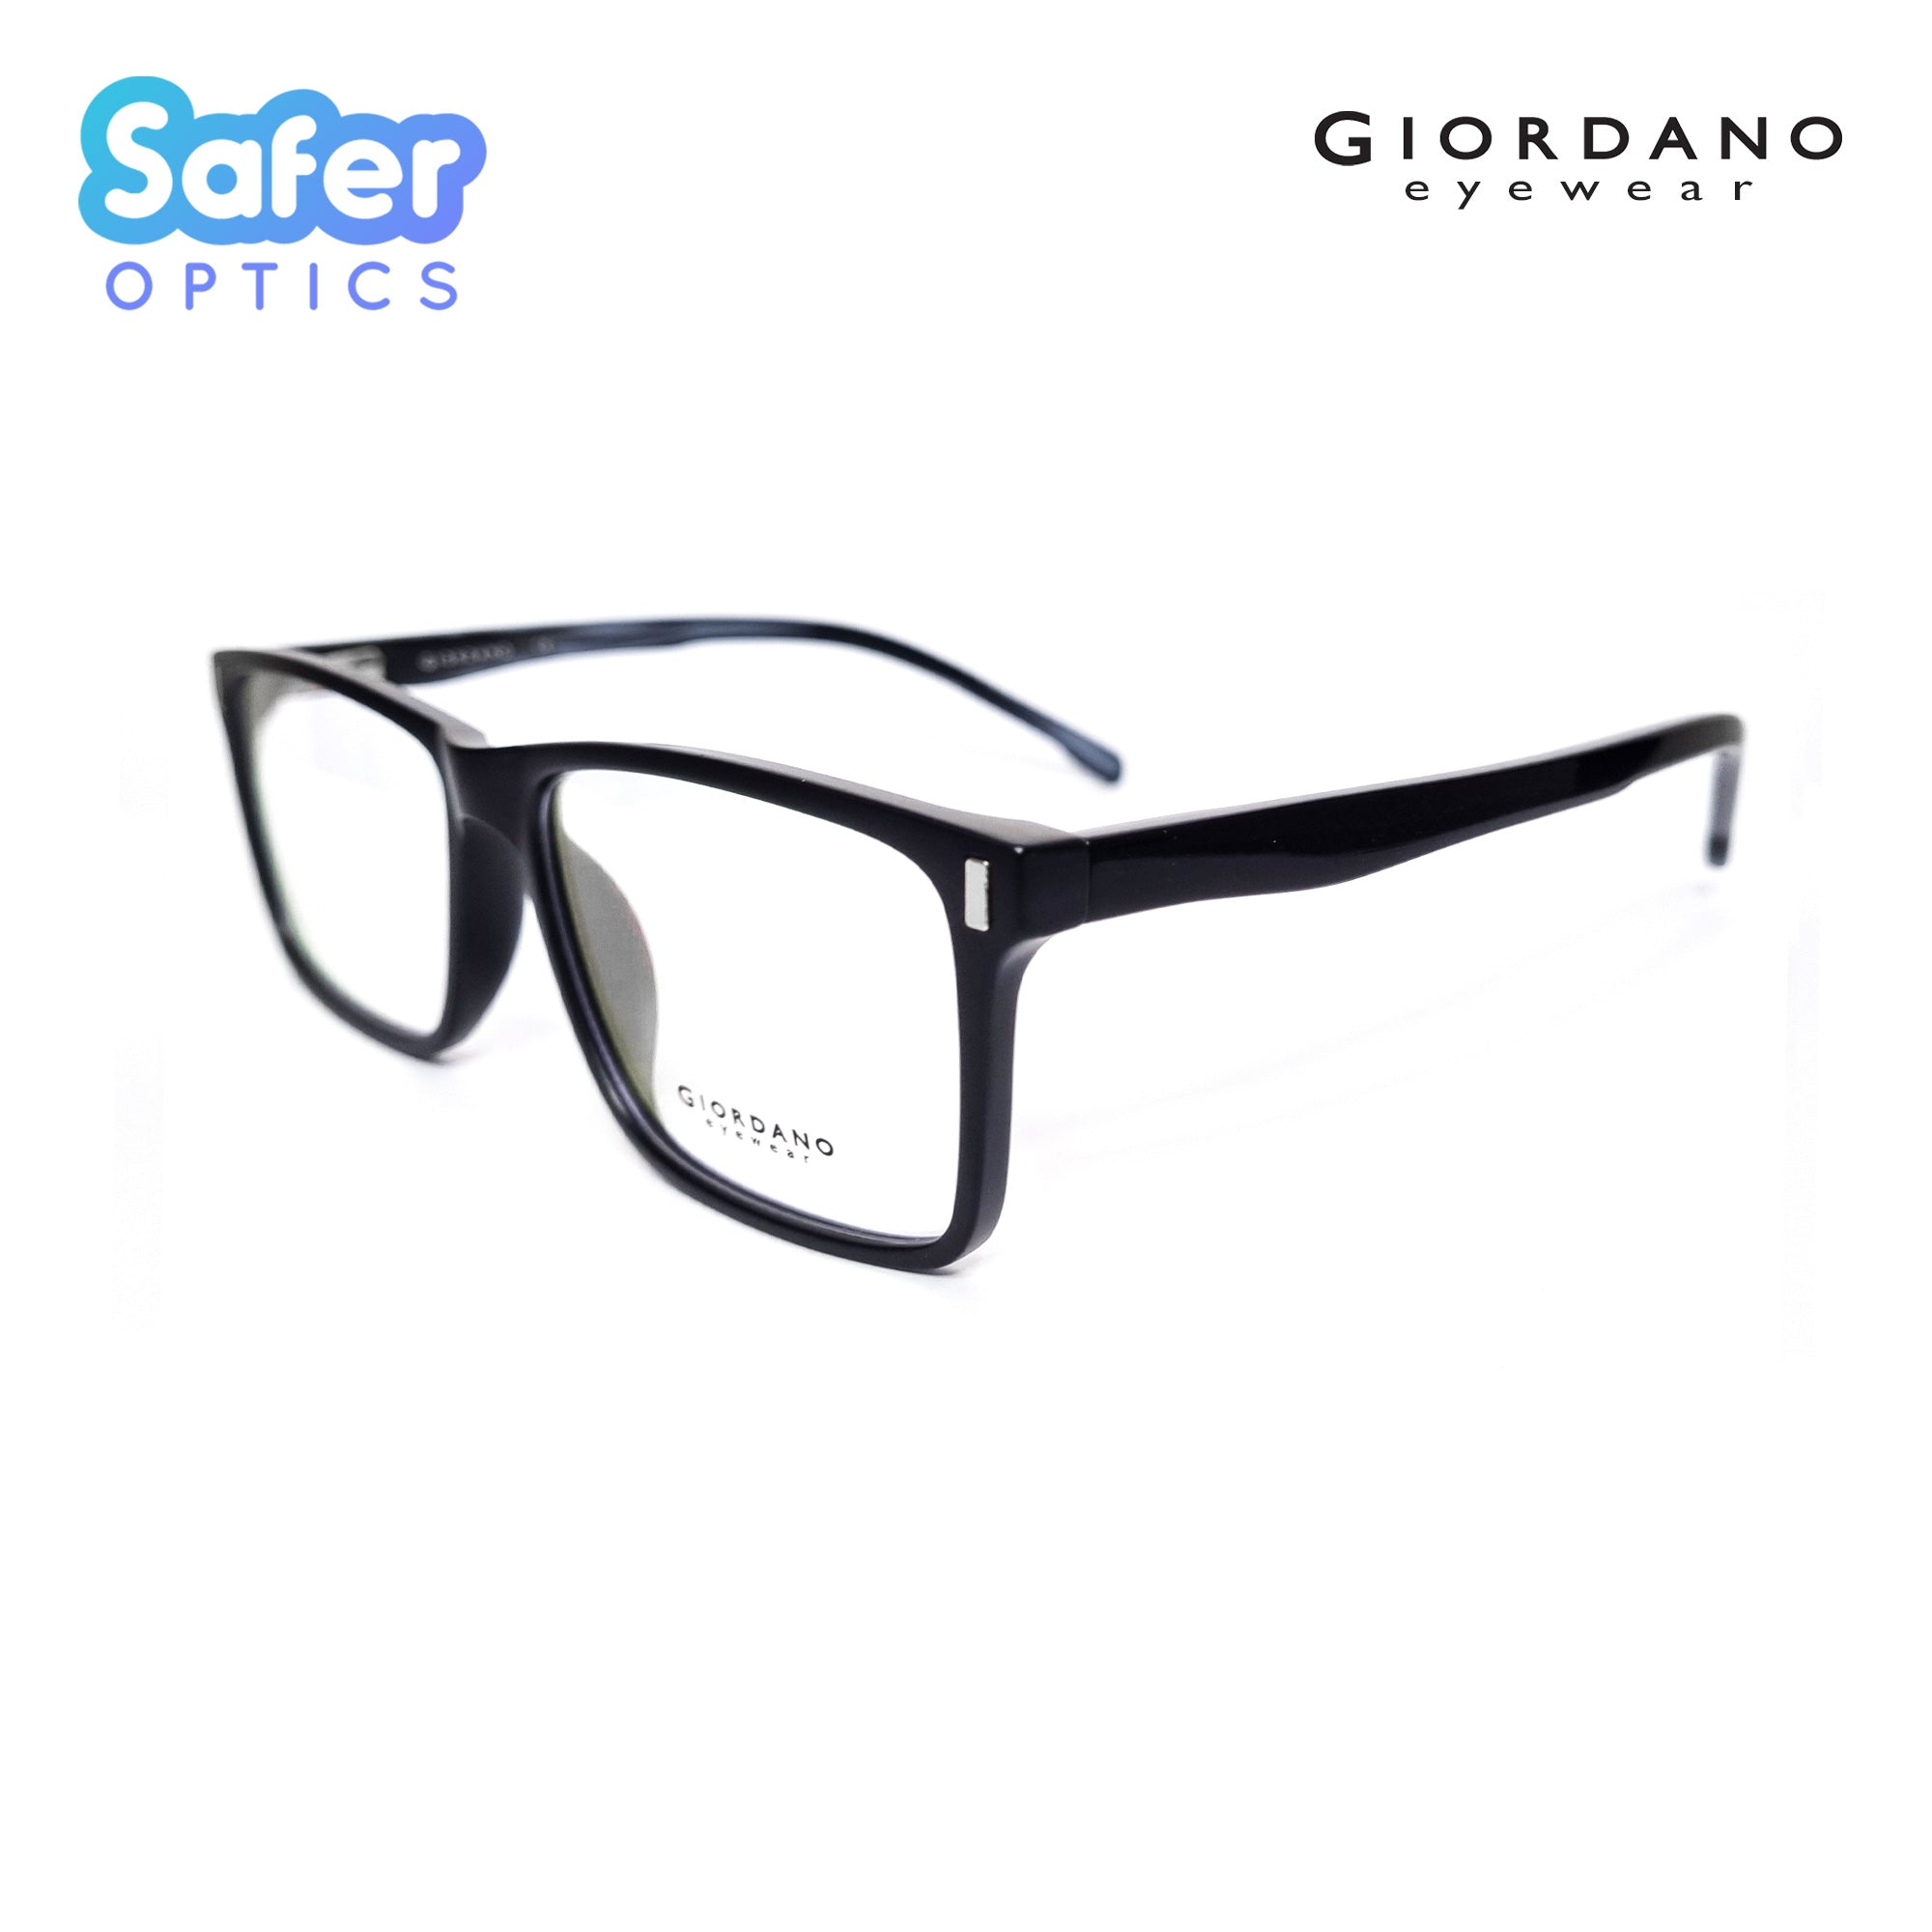 Giordano Eyewear - 973 (3 Colours) - SaferOptics Anti Blue Light Glasses Malaysia | Adult, Black, Customize, Giordano, hotdeals, Large, new